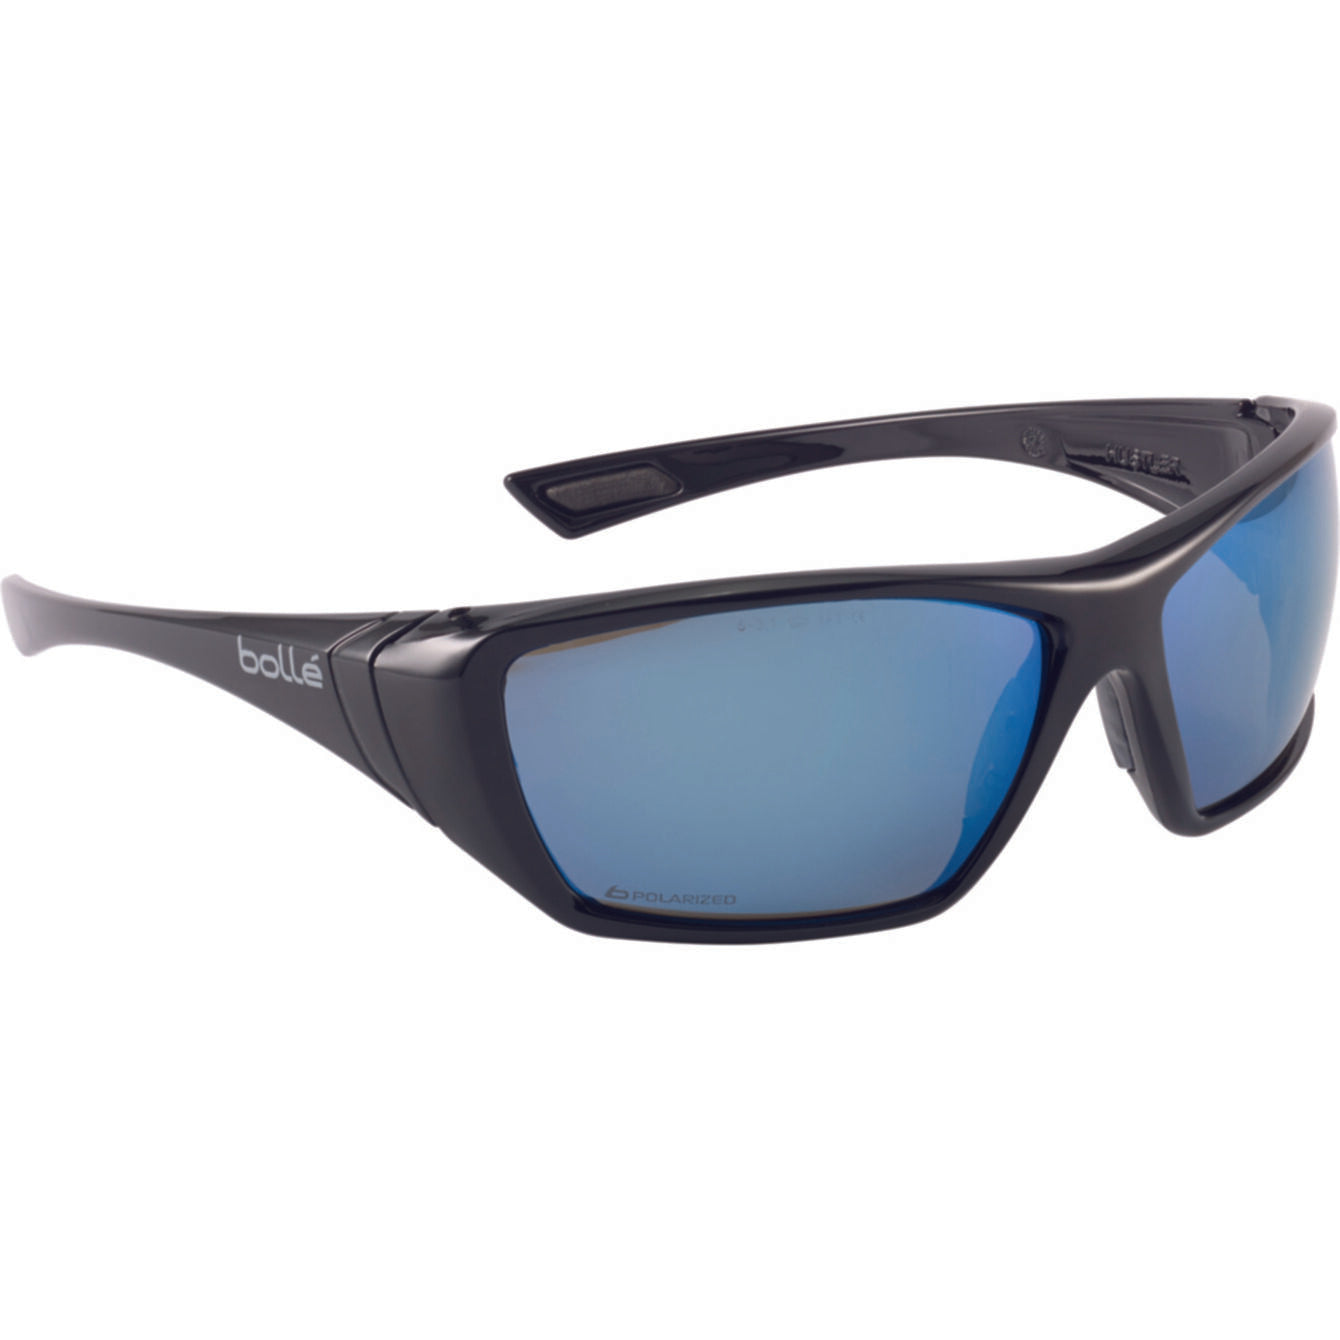 Bolle HUSTLER Polarized Blue Flash Safety Glasses - HUSTFLASH